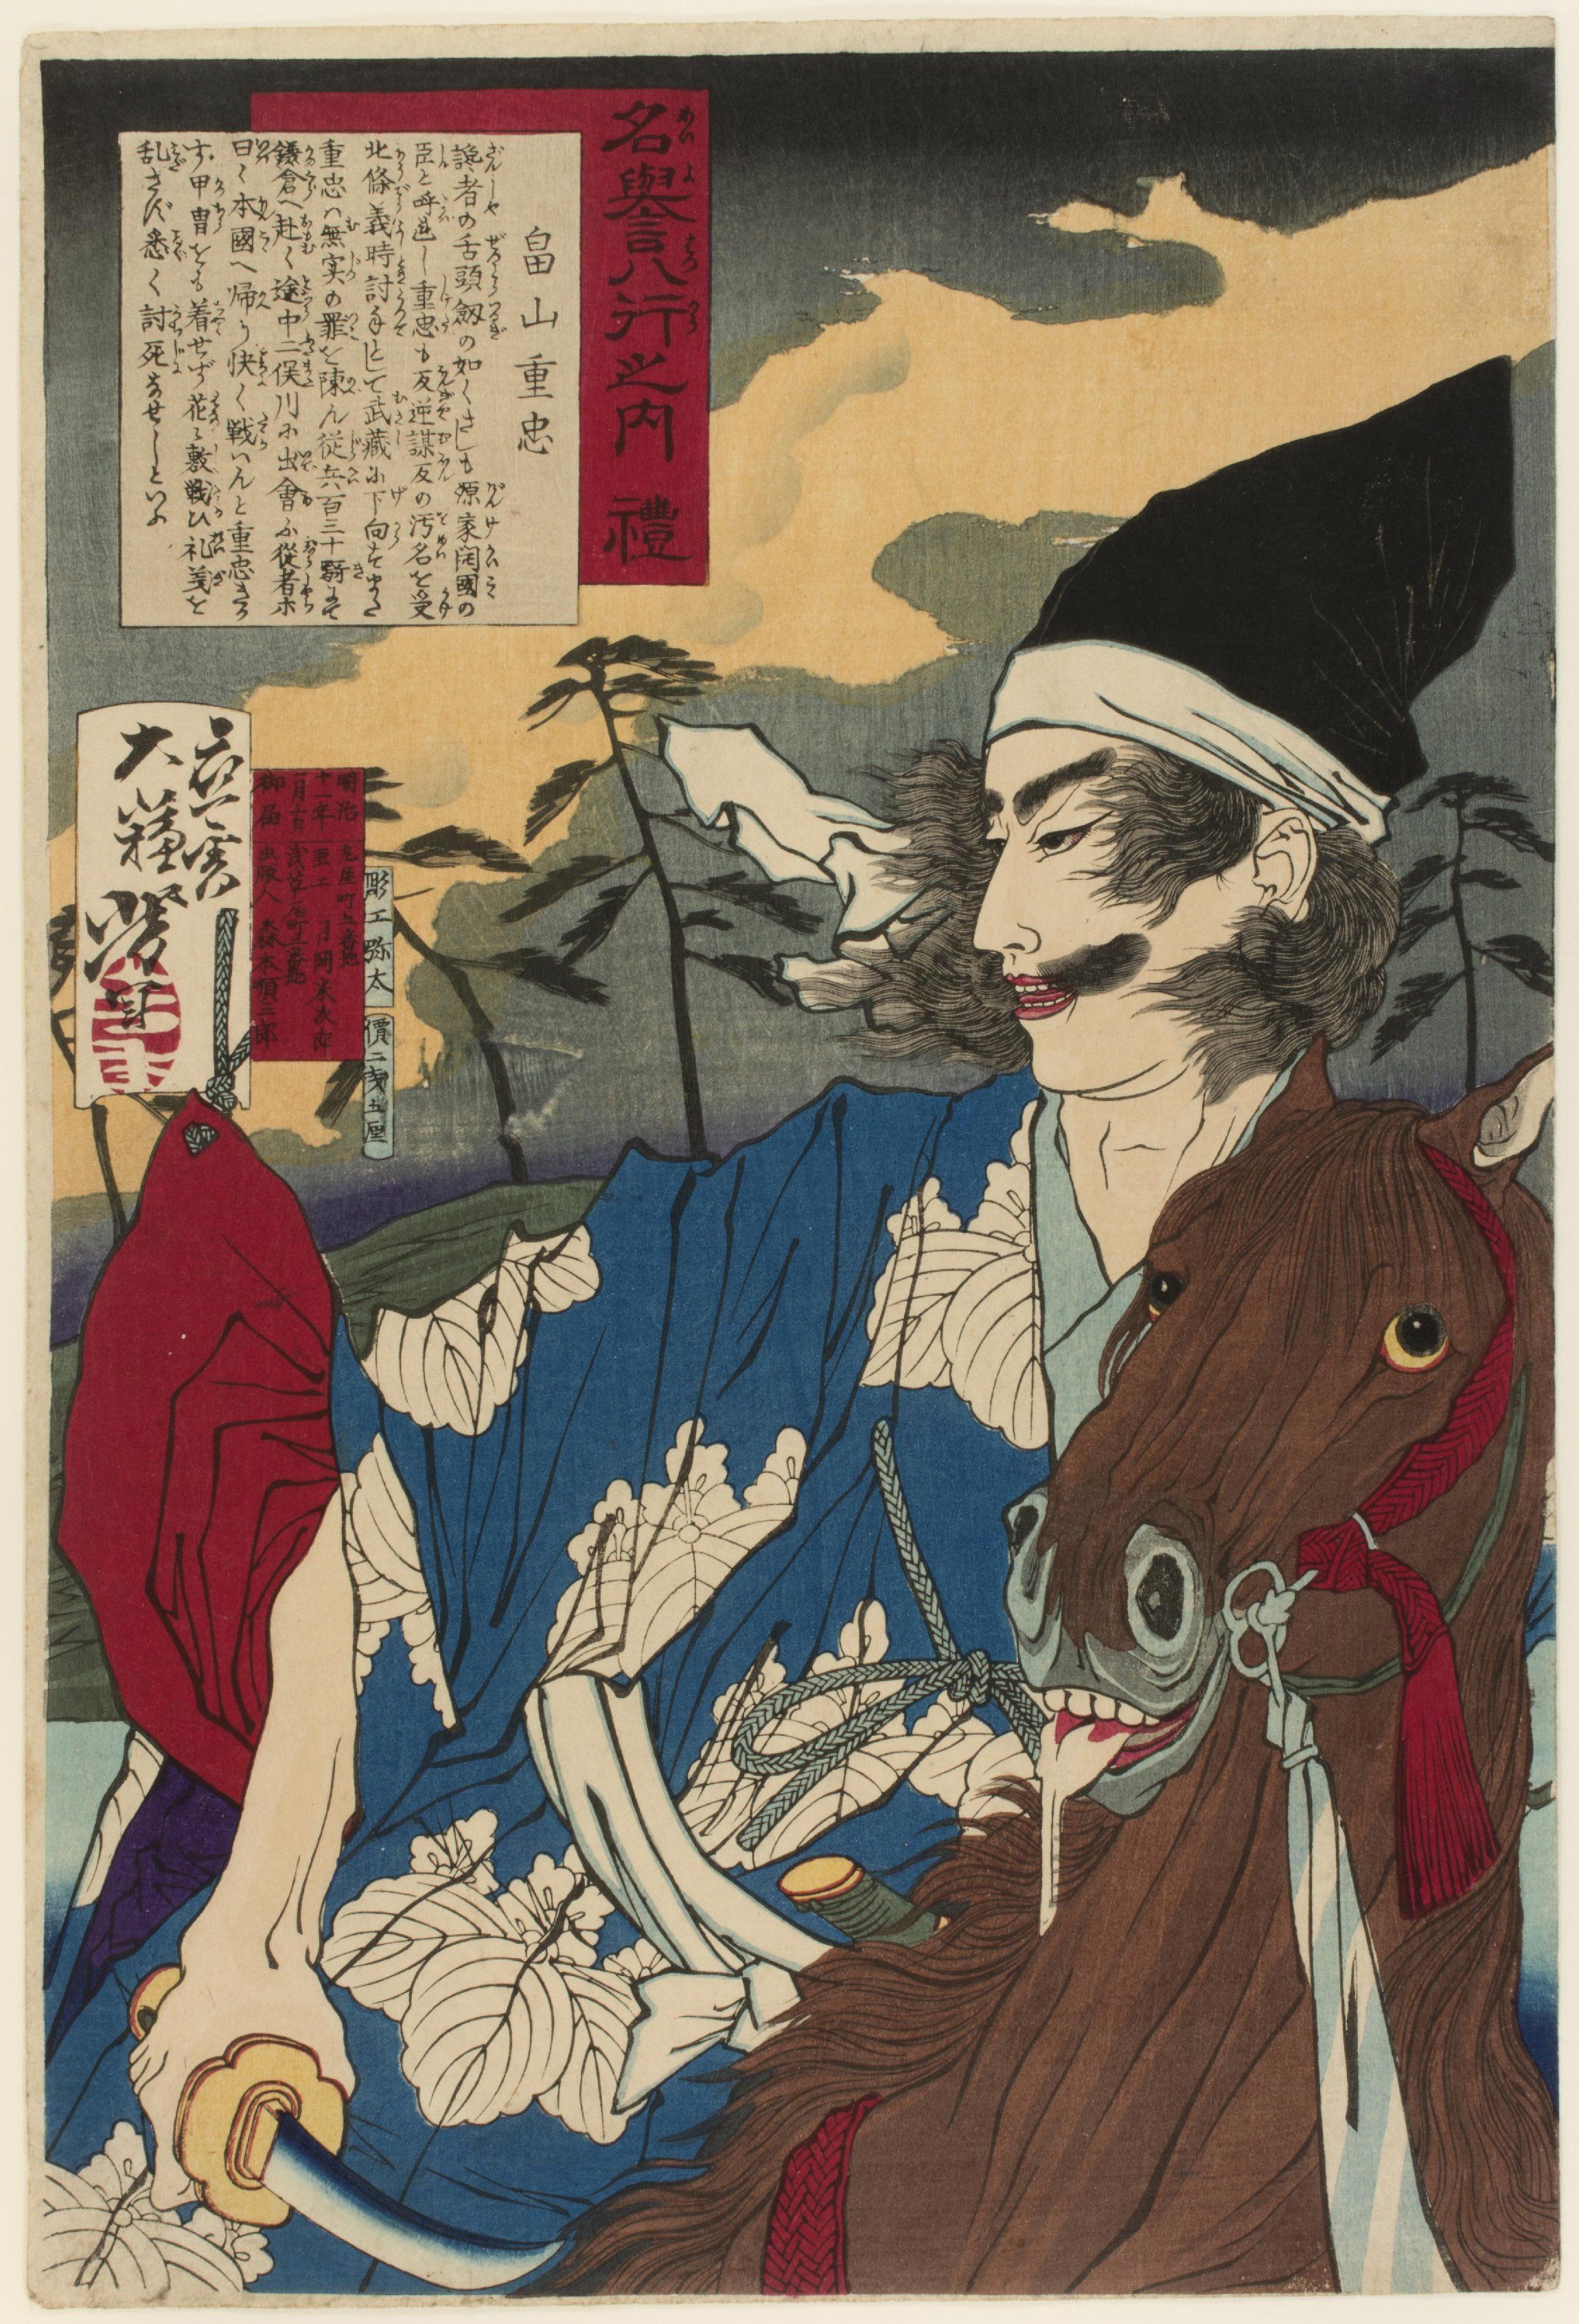 Beauty and Violence: Woodblock Prints by Yoshitoshi, 1839-1892